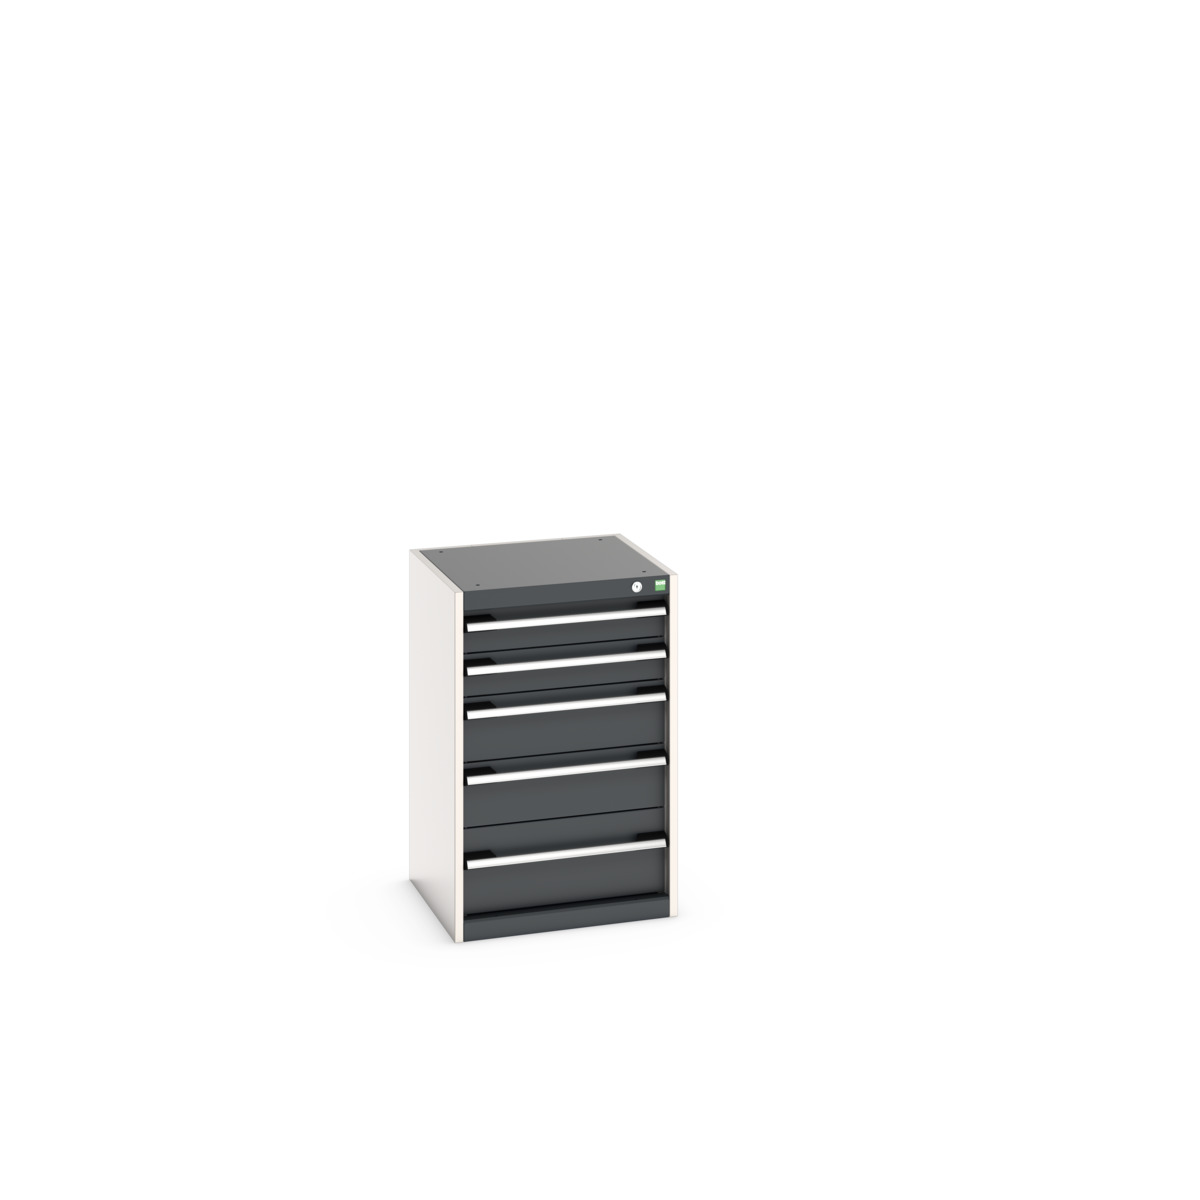 40010027. - cubio drawer cabinet